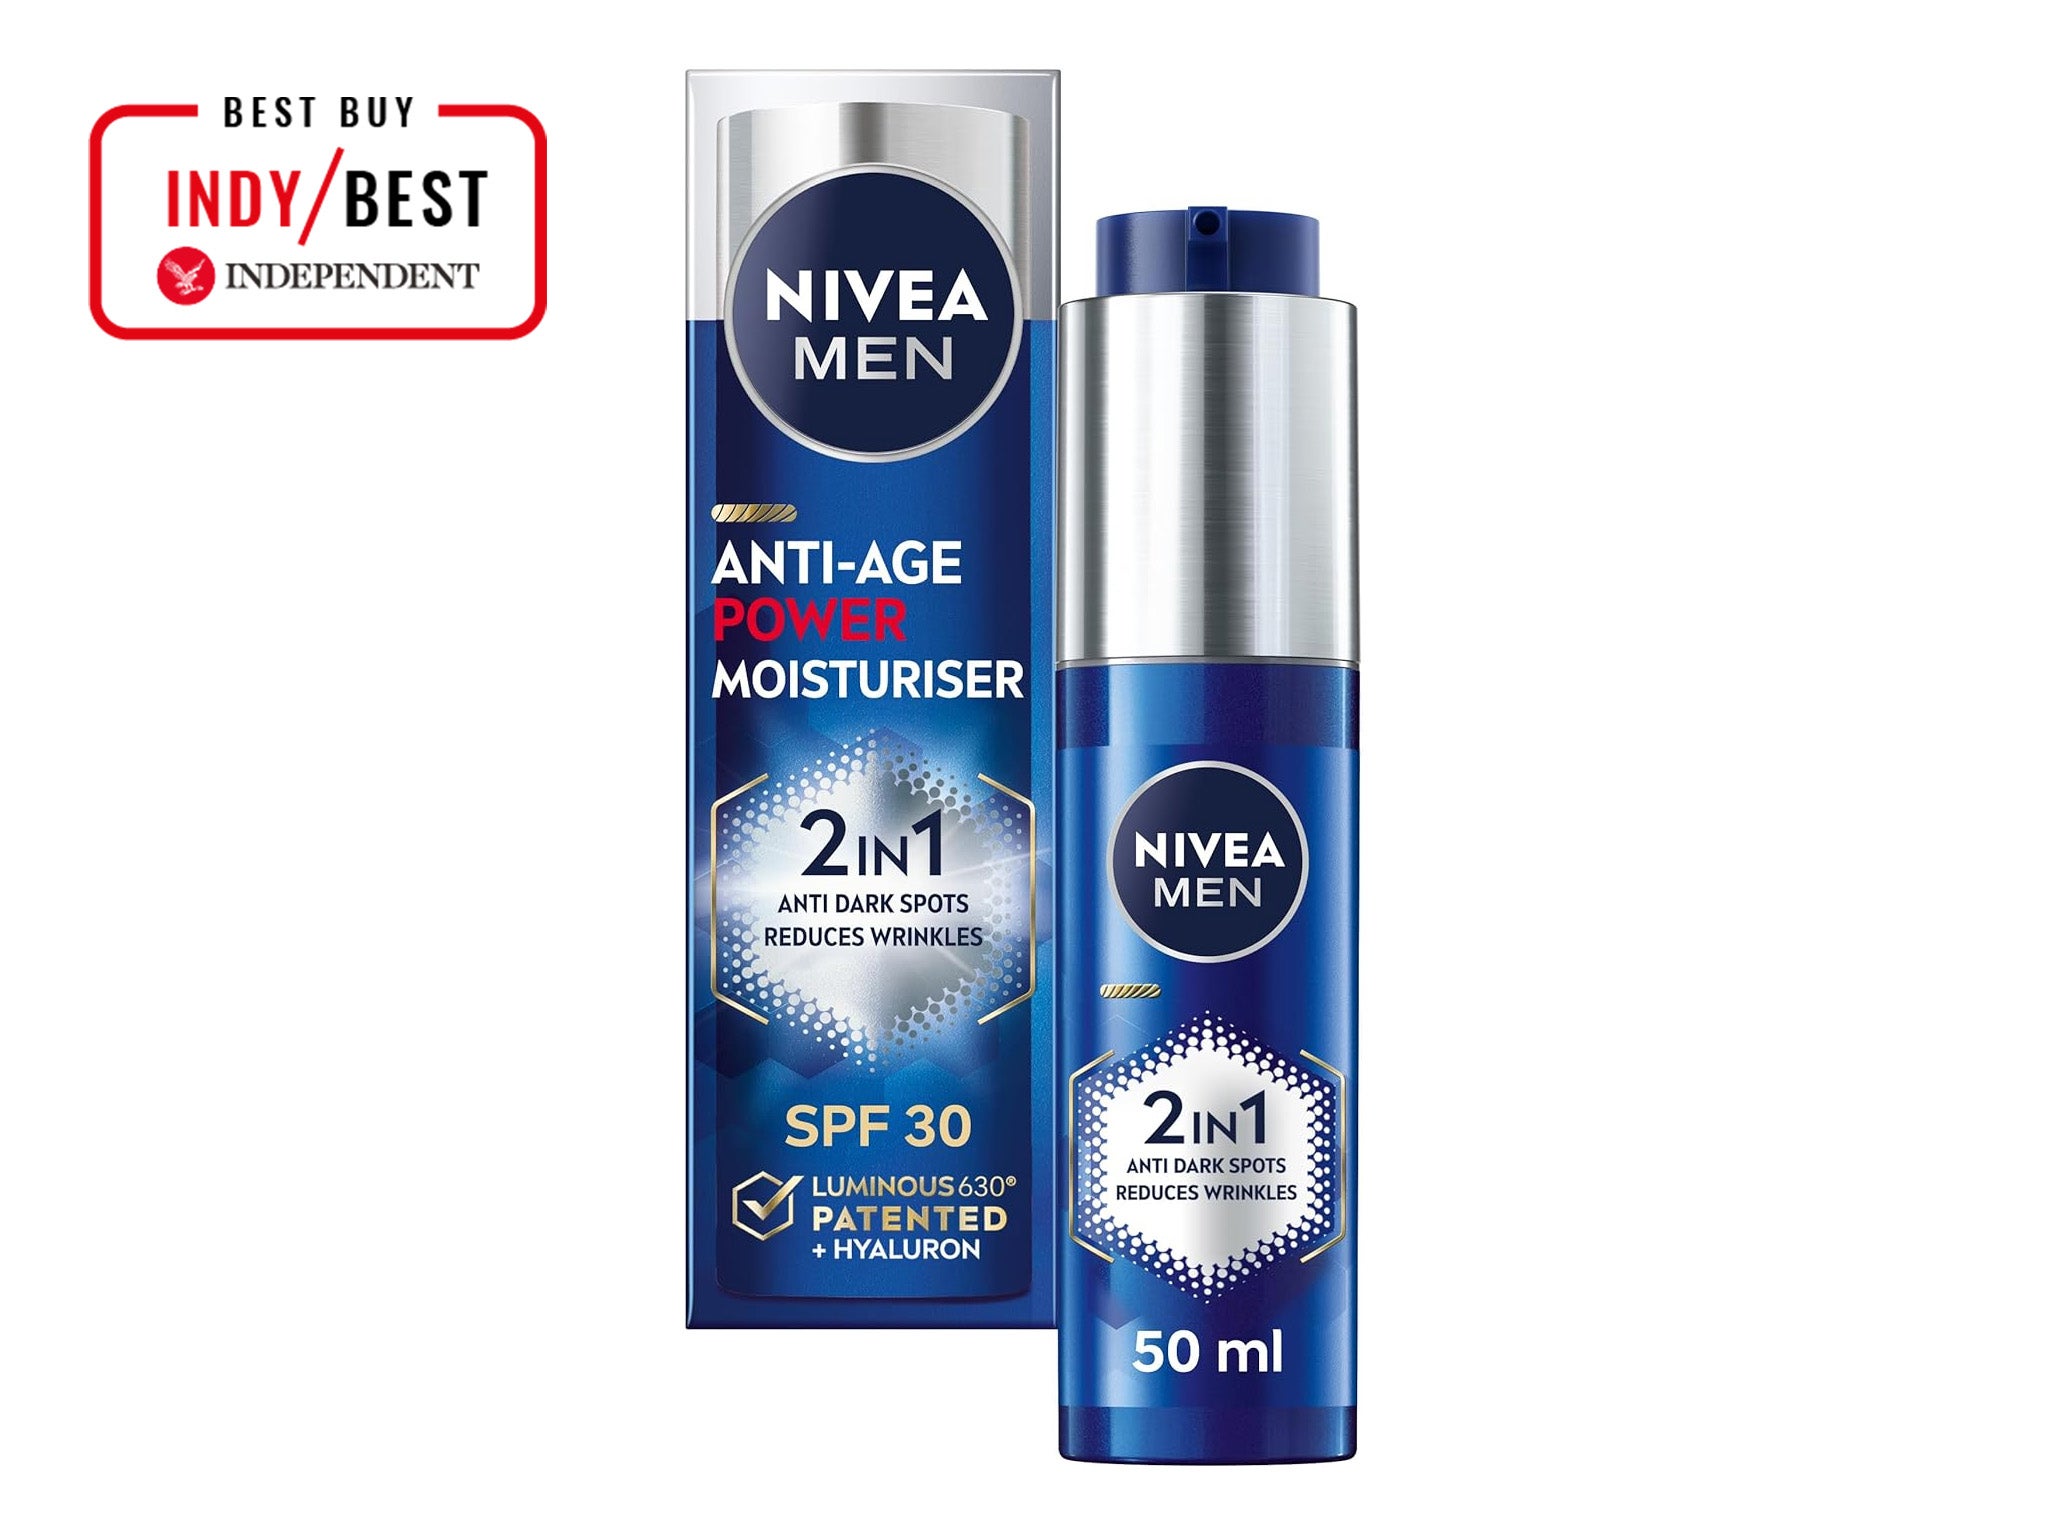 Nivea Men 2-in-1 anti-age power moisturiser, SPF 30